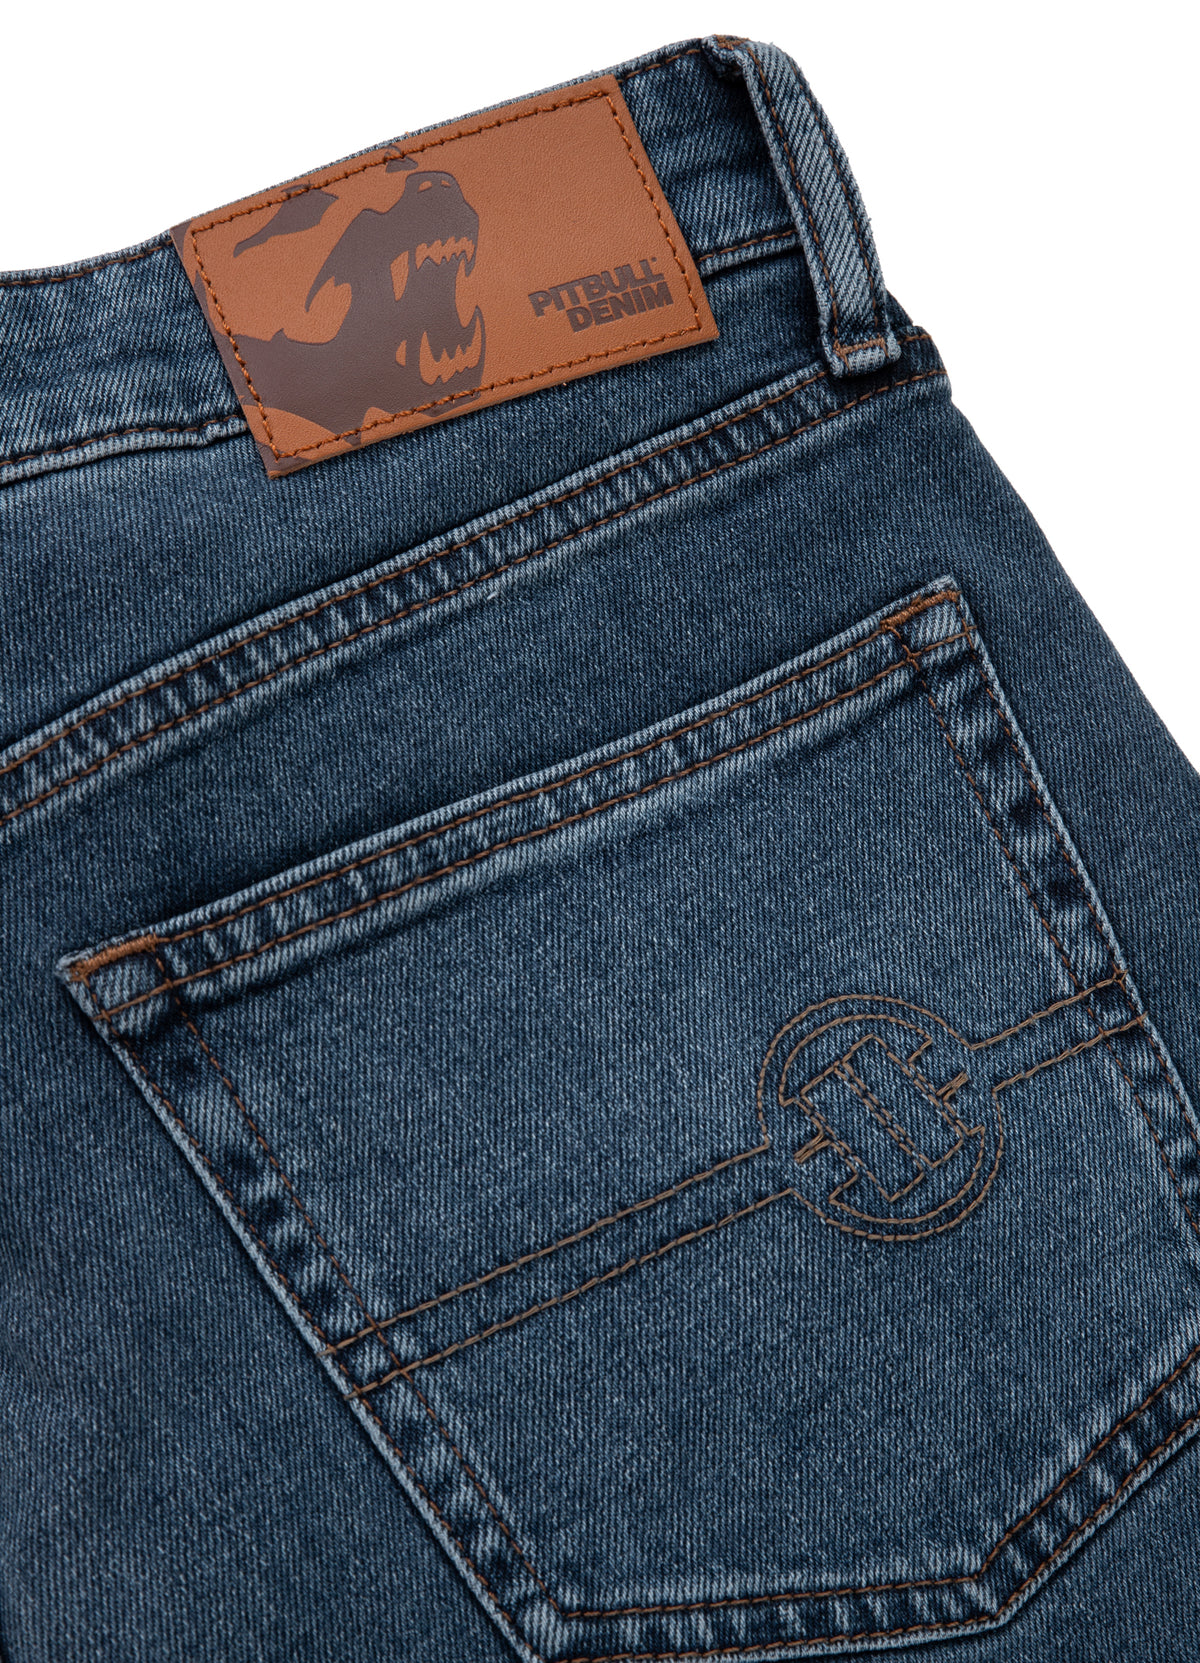 HIGHLANDER Long Medium Wash Jeans